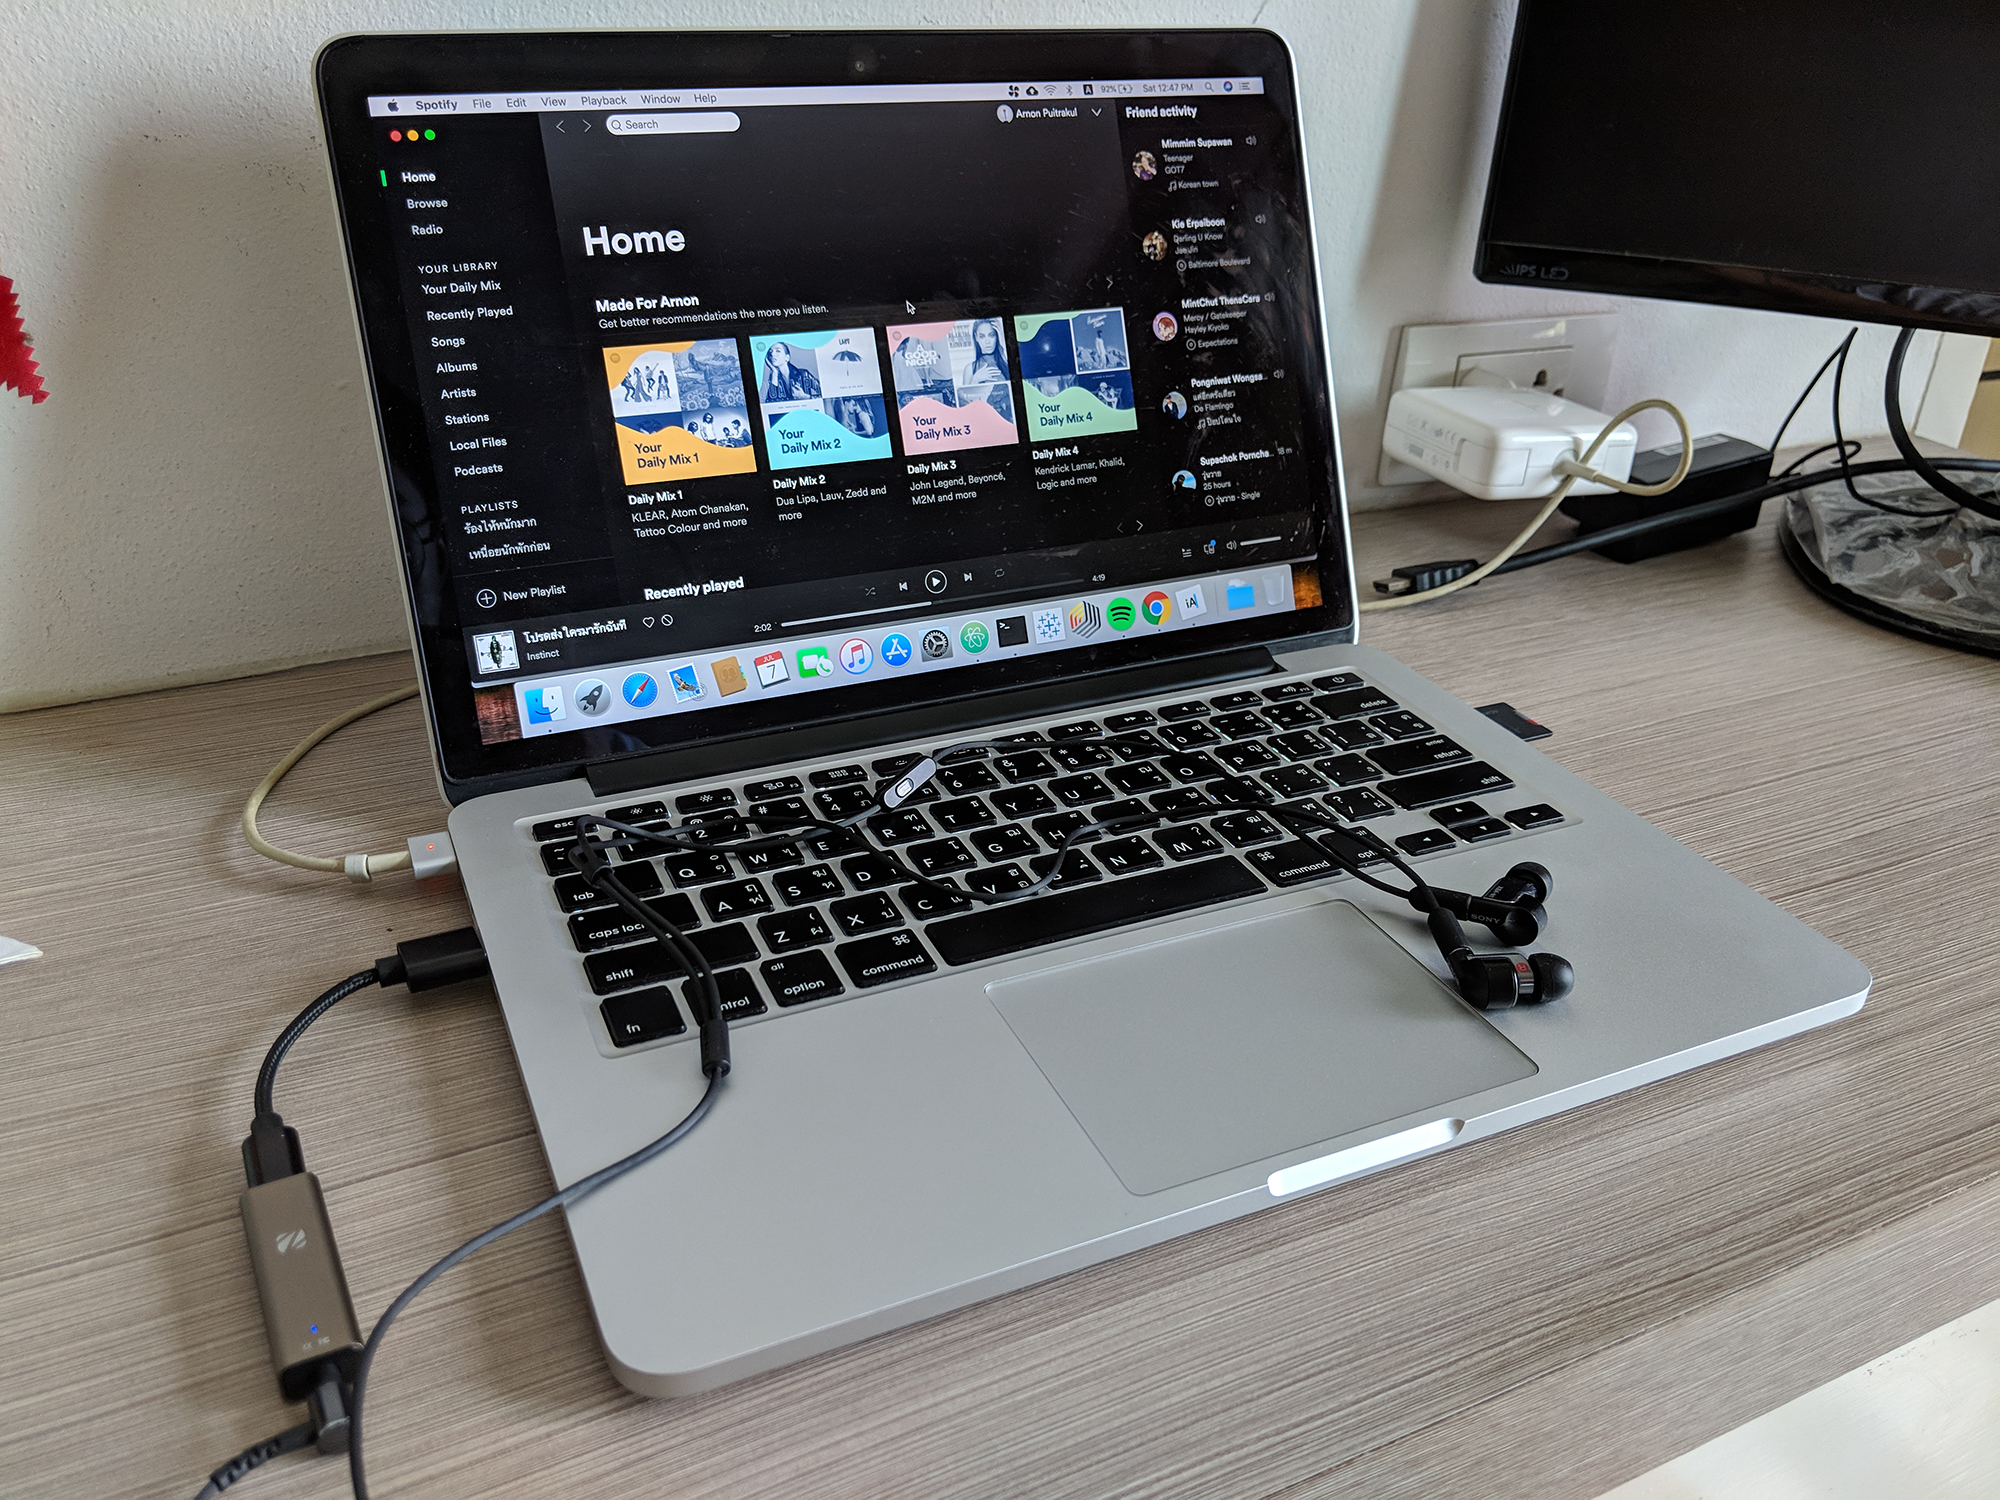 ZuperDAC-S connected Macbook Pro 2015